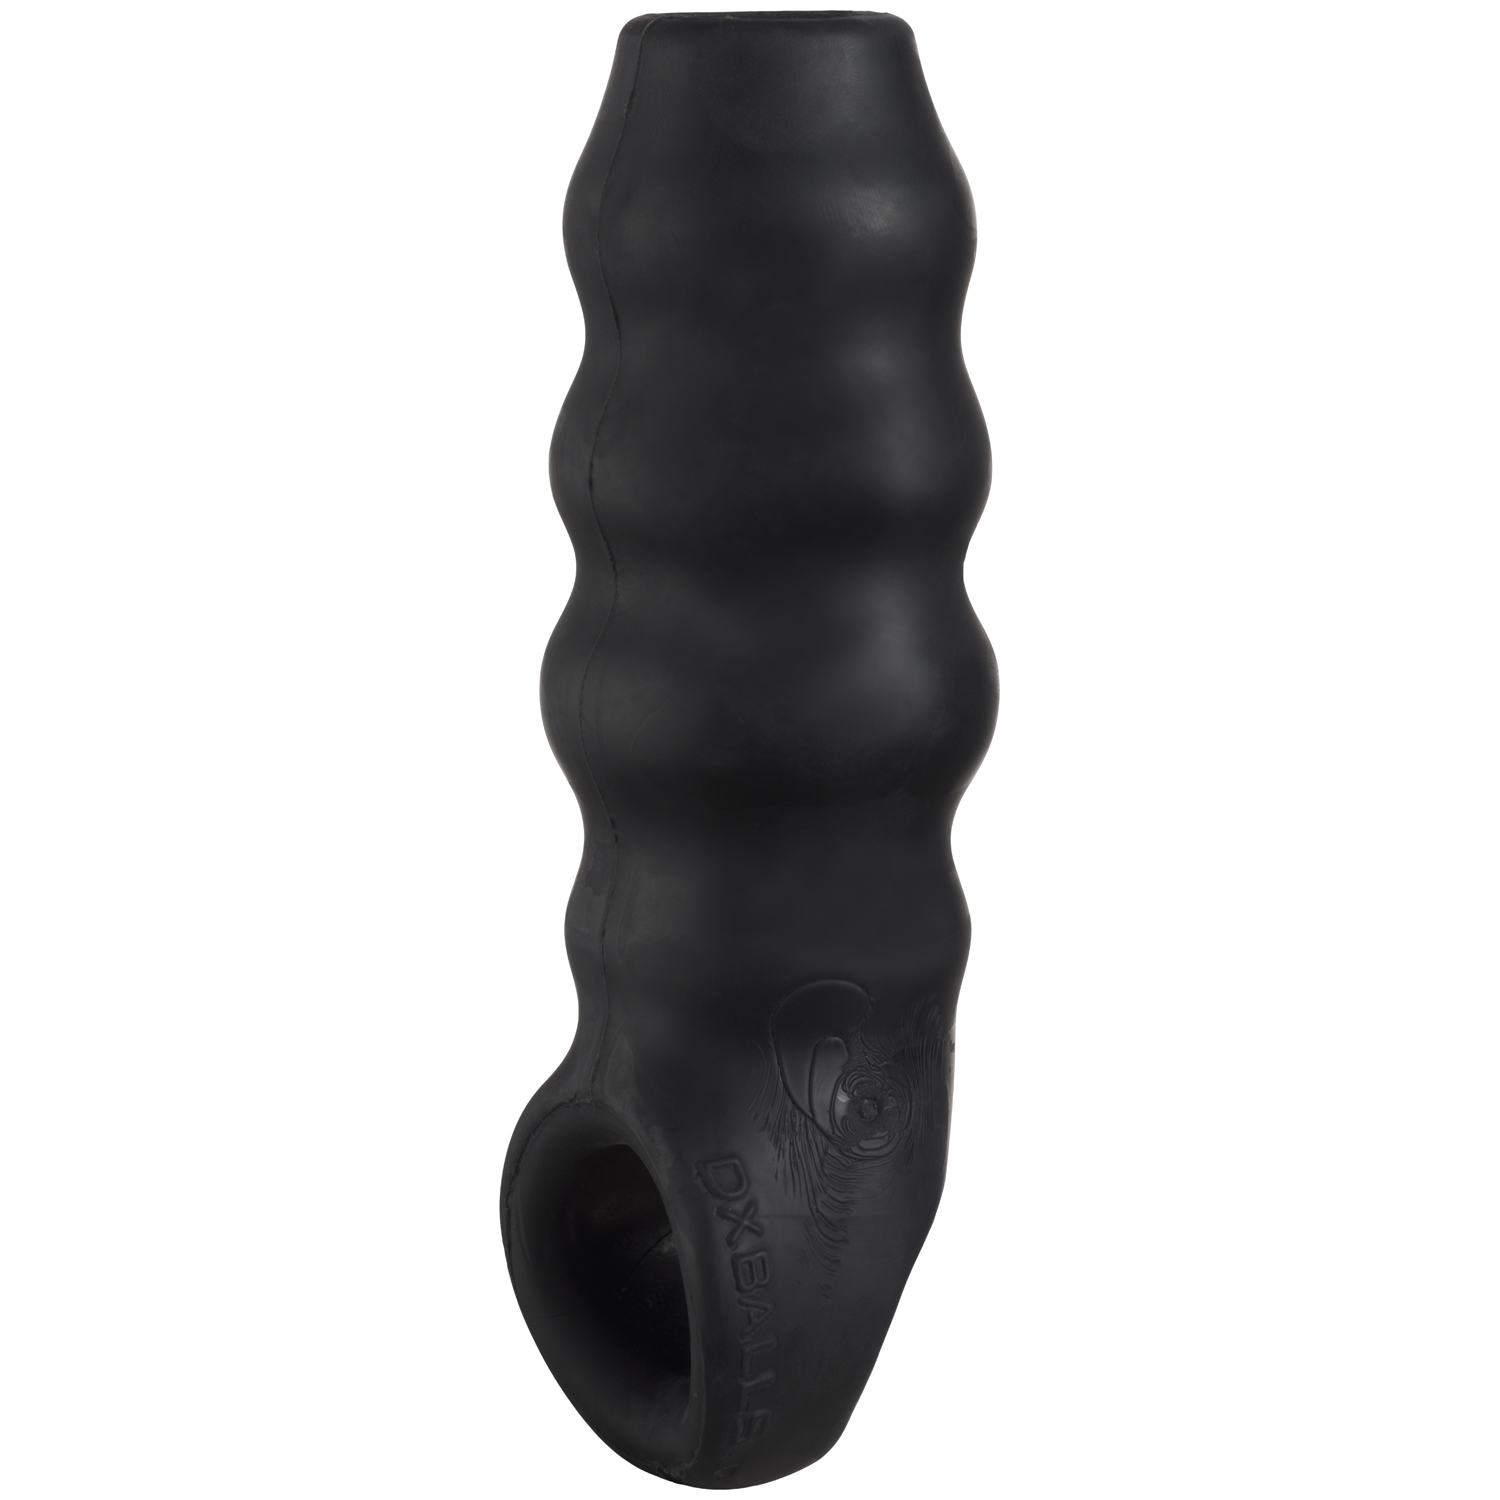 Oxballs Invader Penis Sleeve - Black